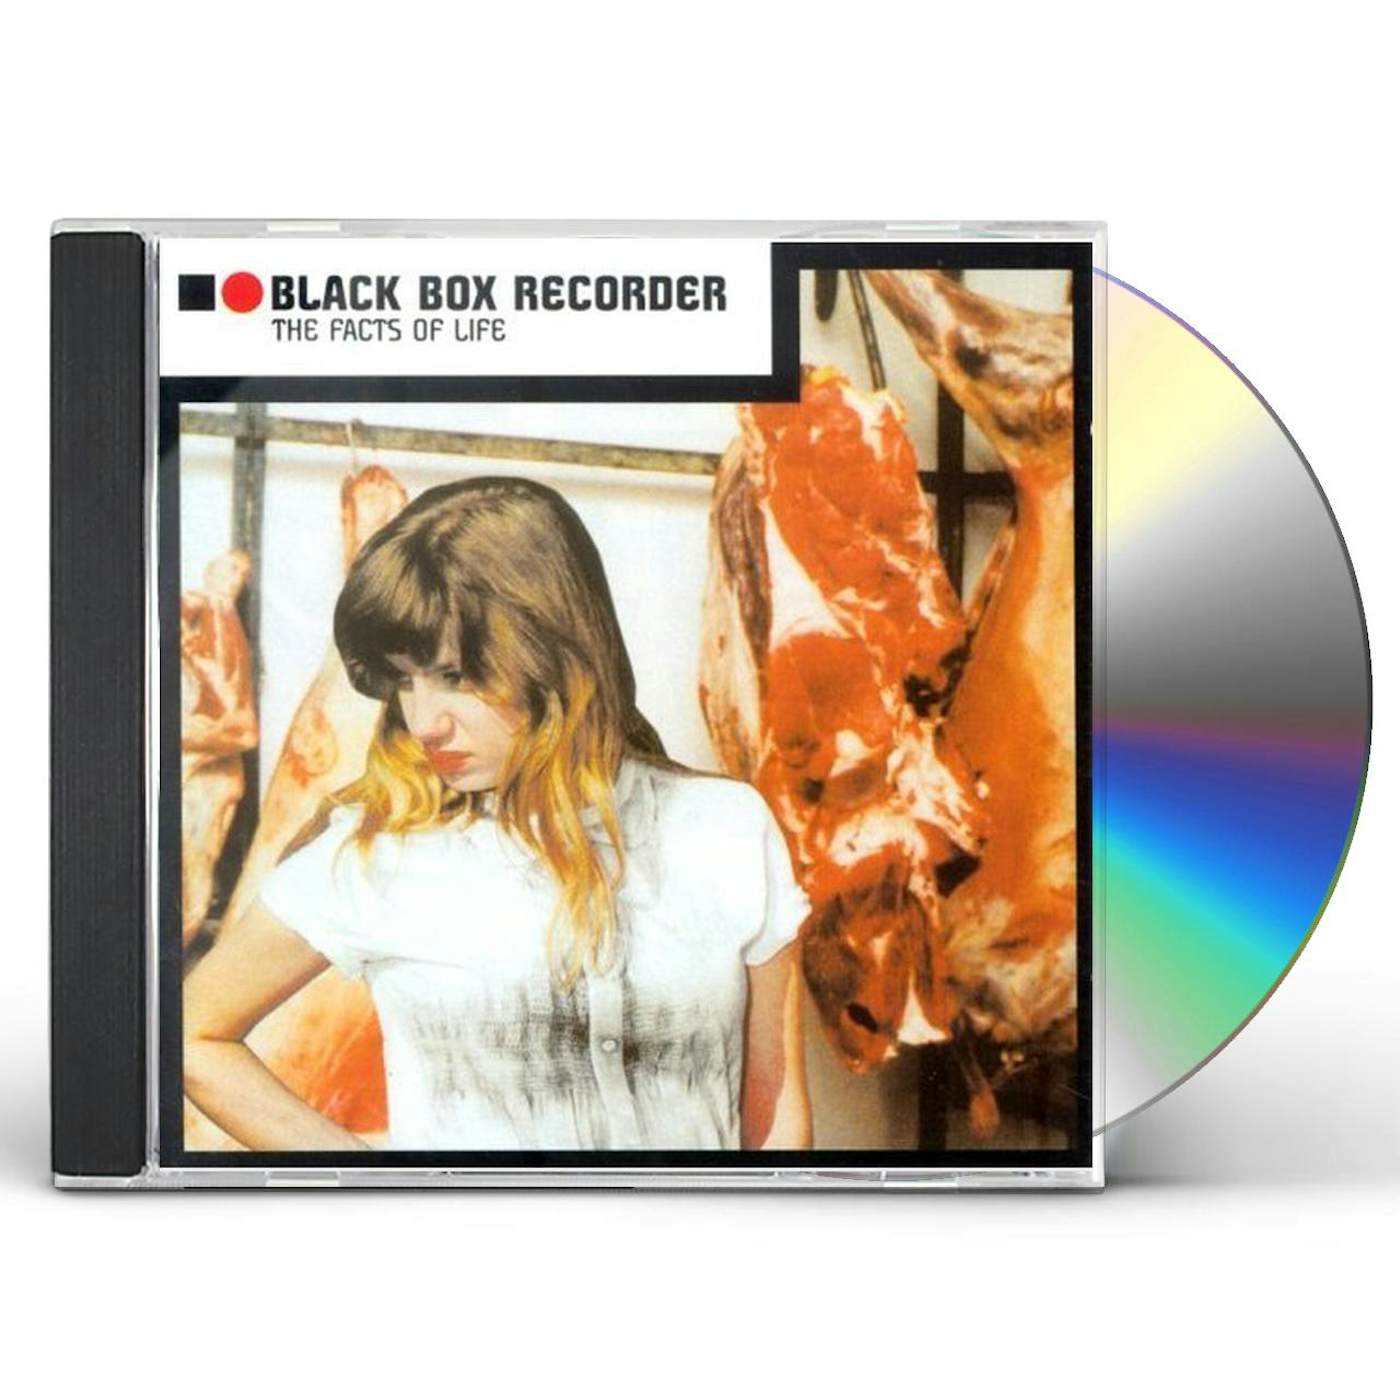 Black Box Recorder FACTS OF LIFE CD